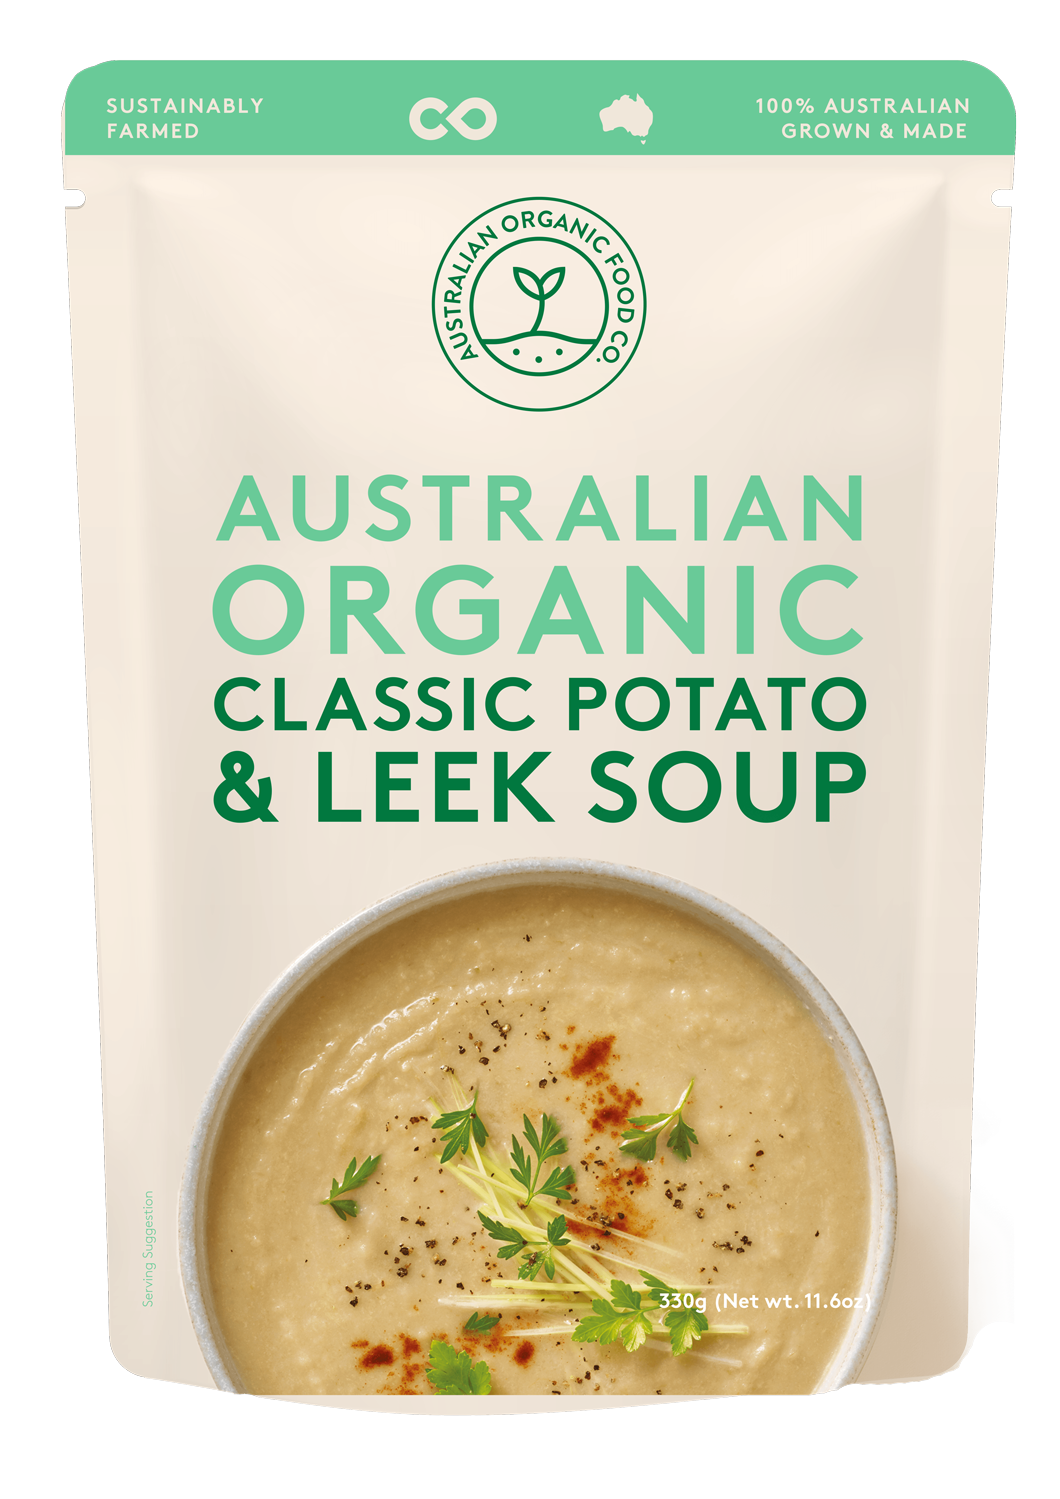 Potato & Leek Soup Package Image